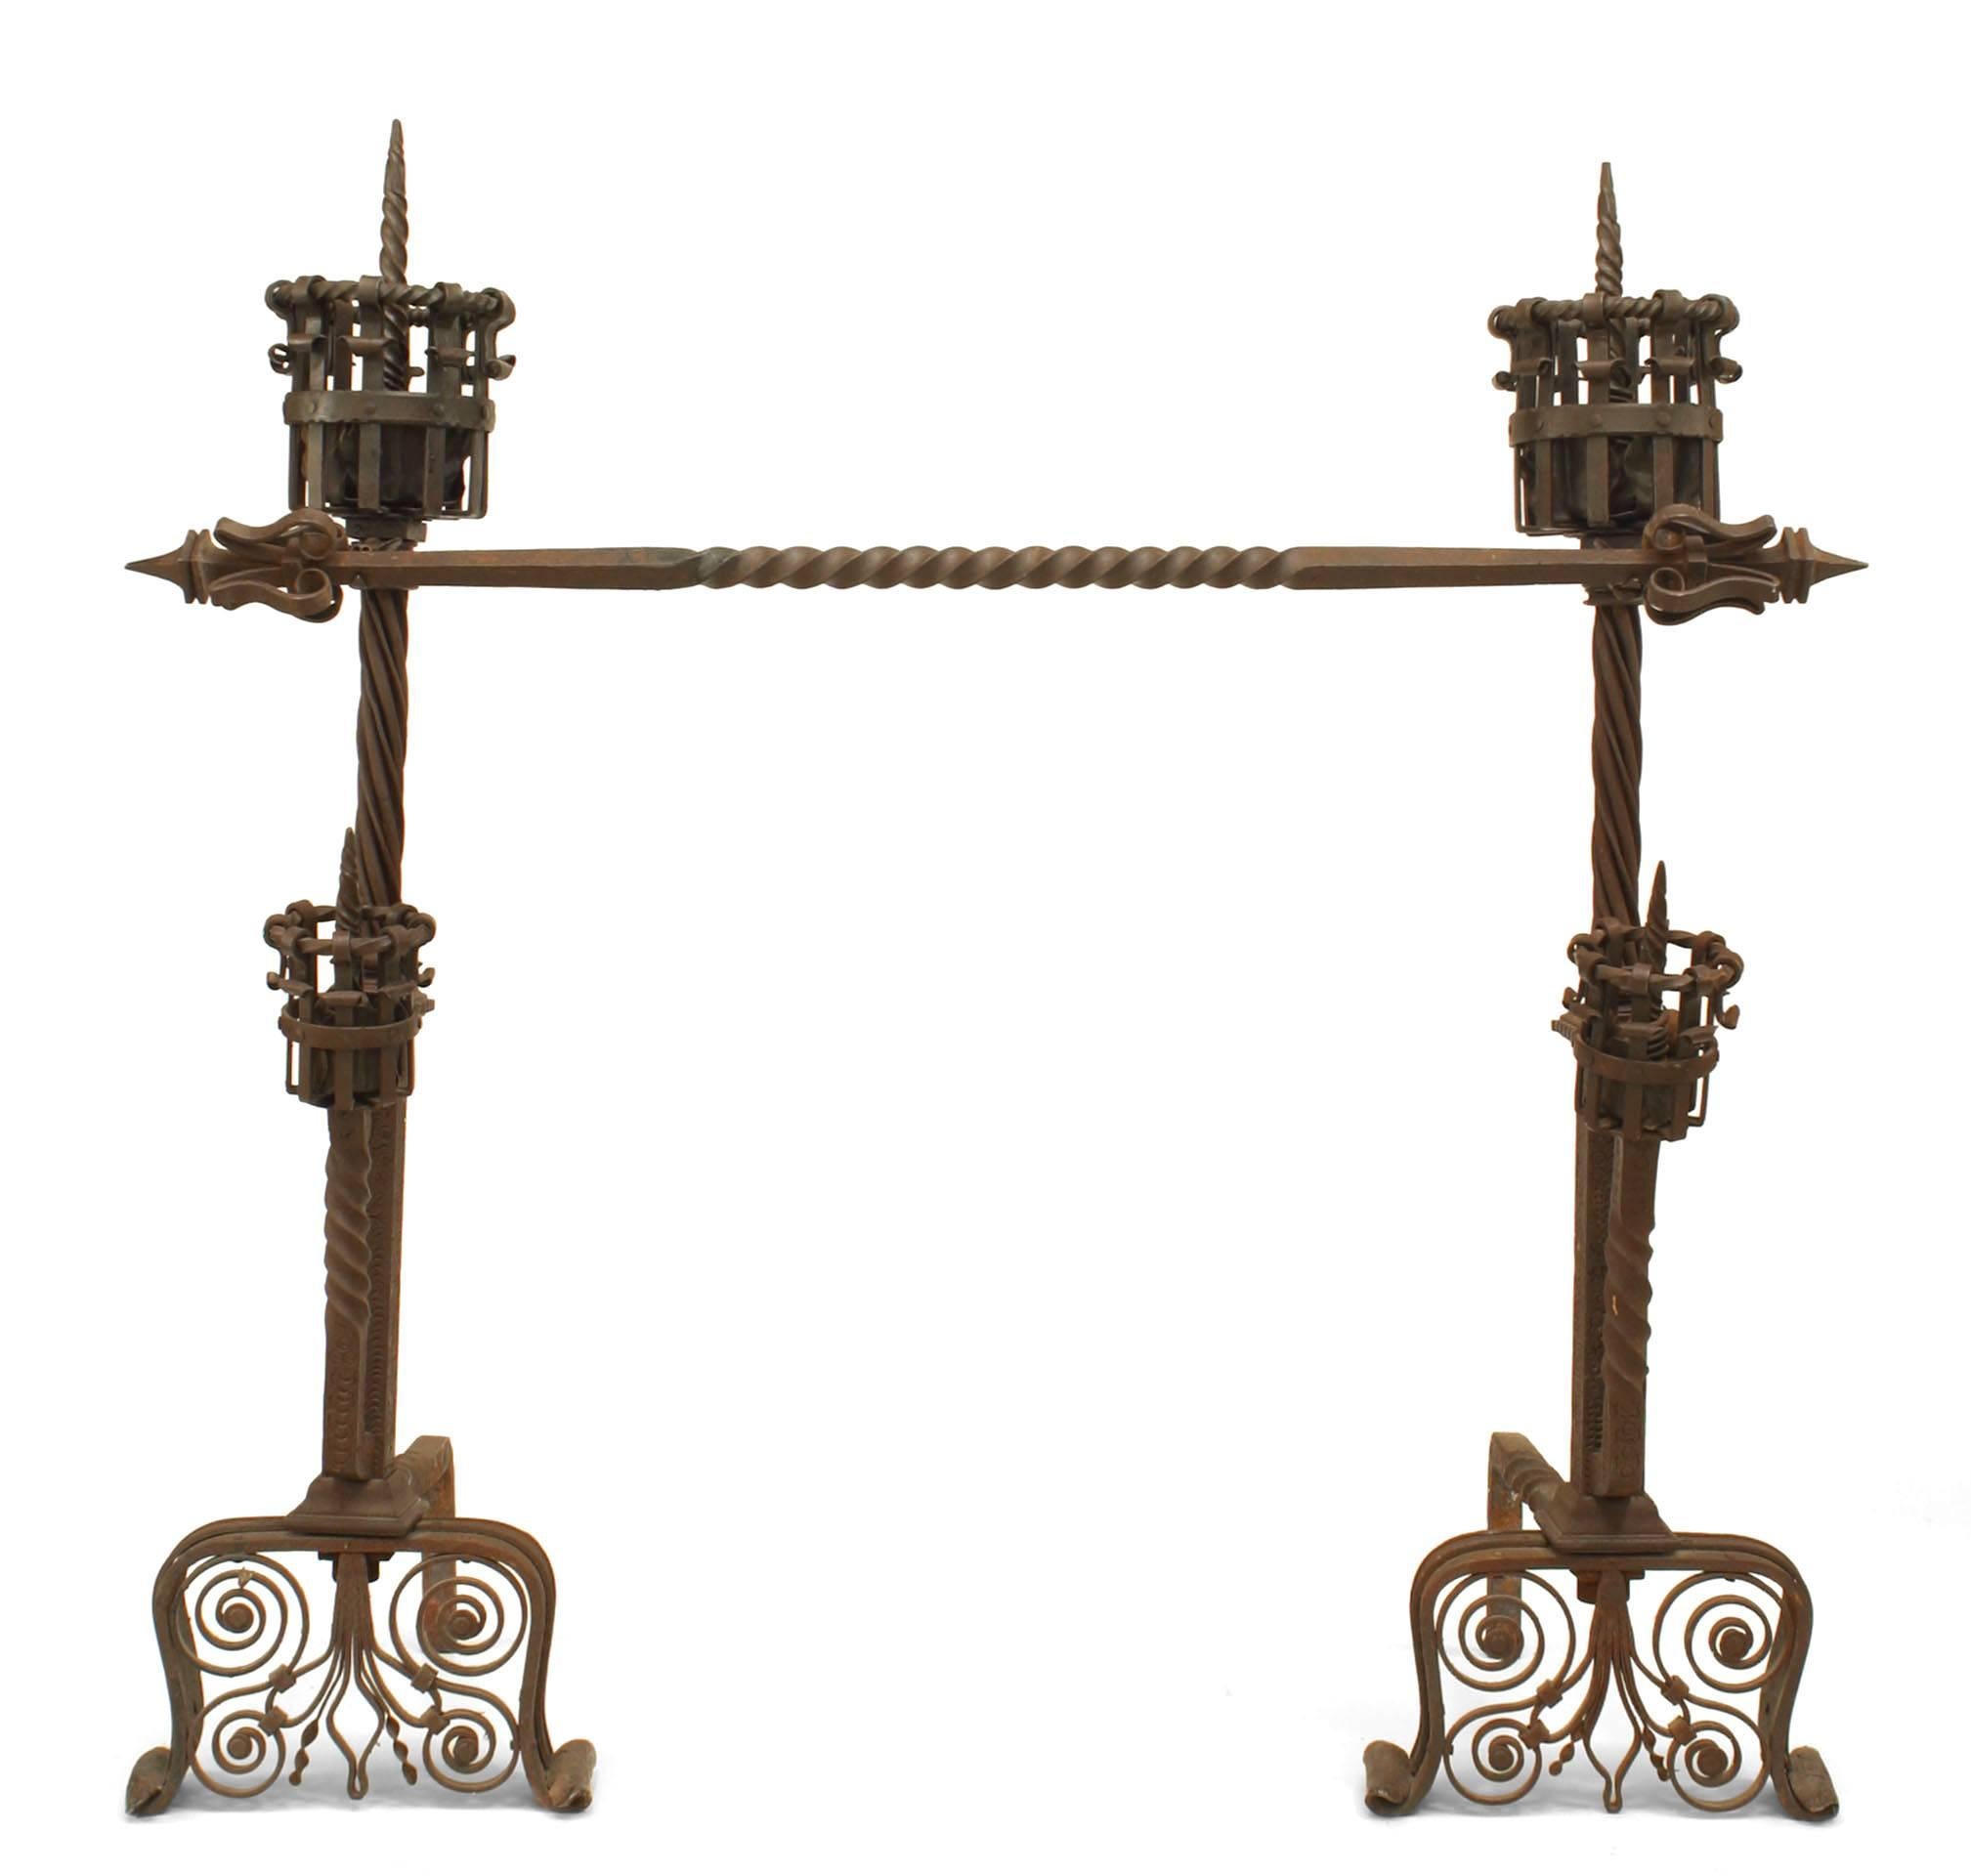 Renaissance Revival Pair of Samuel Yellin Italian Renaissance Wrought Iron Andirons For Sale